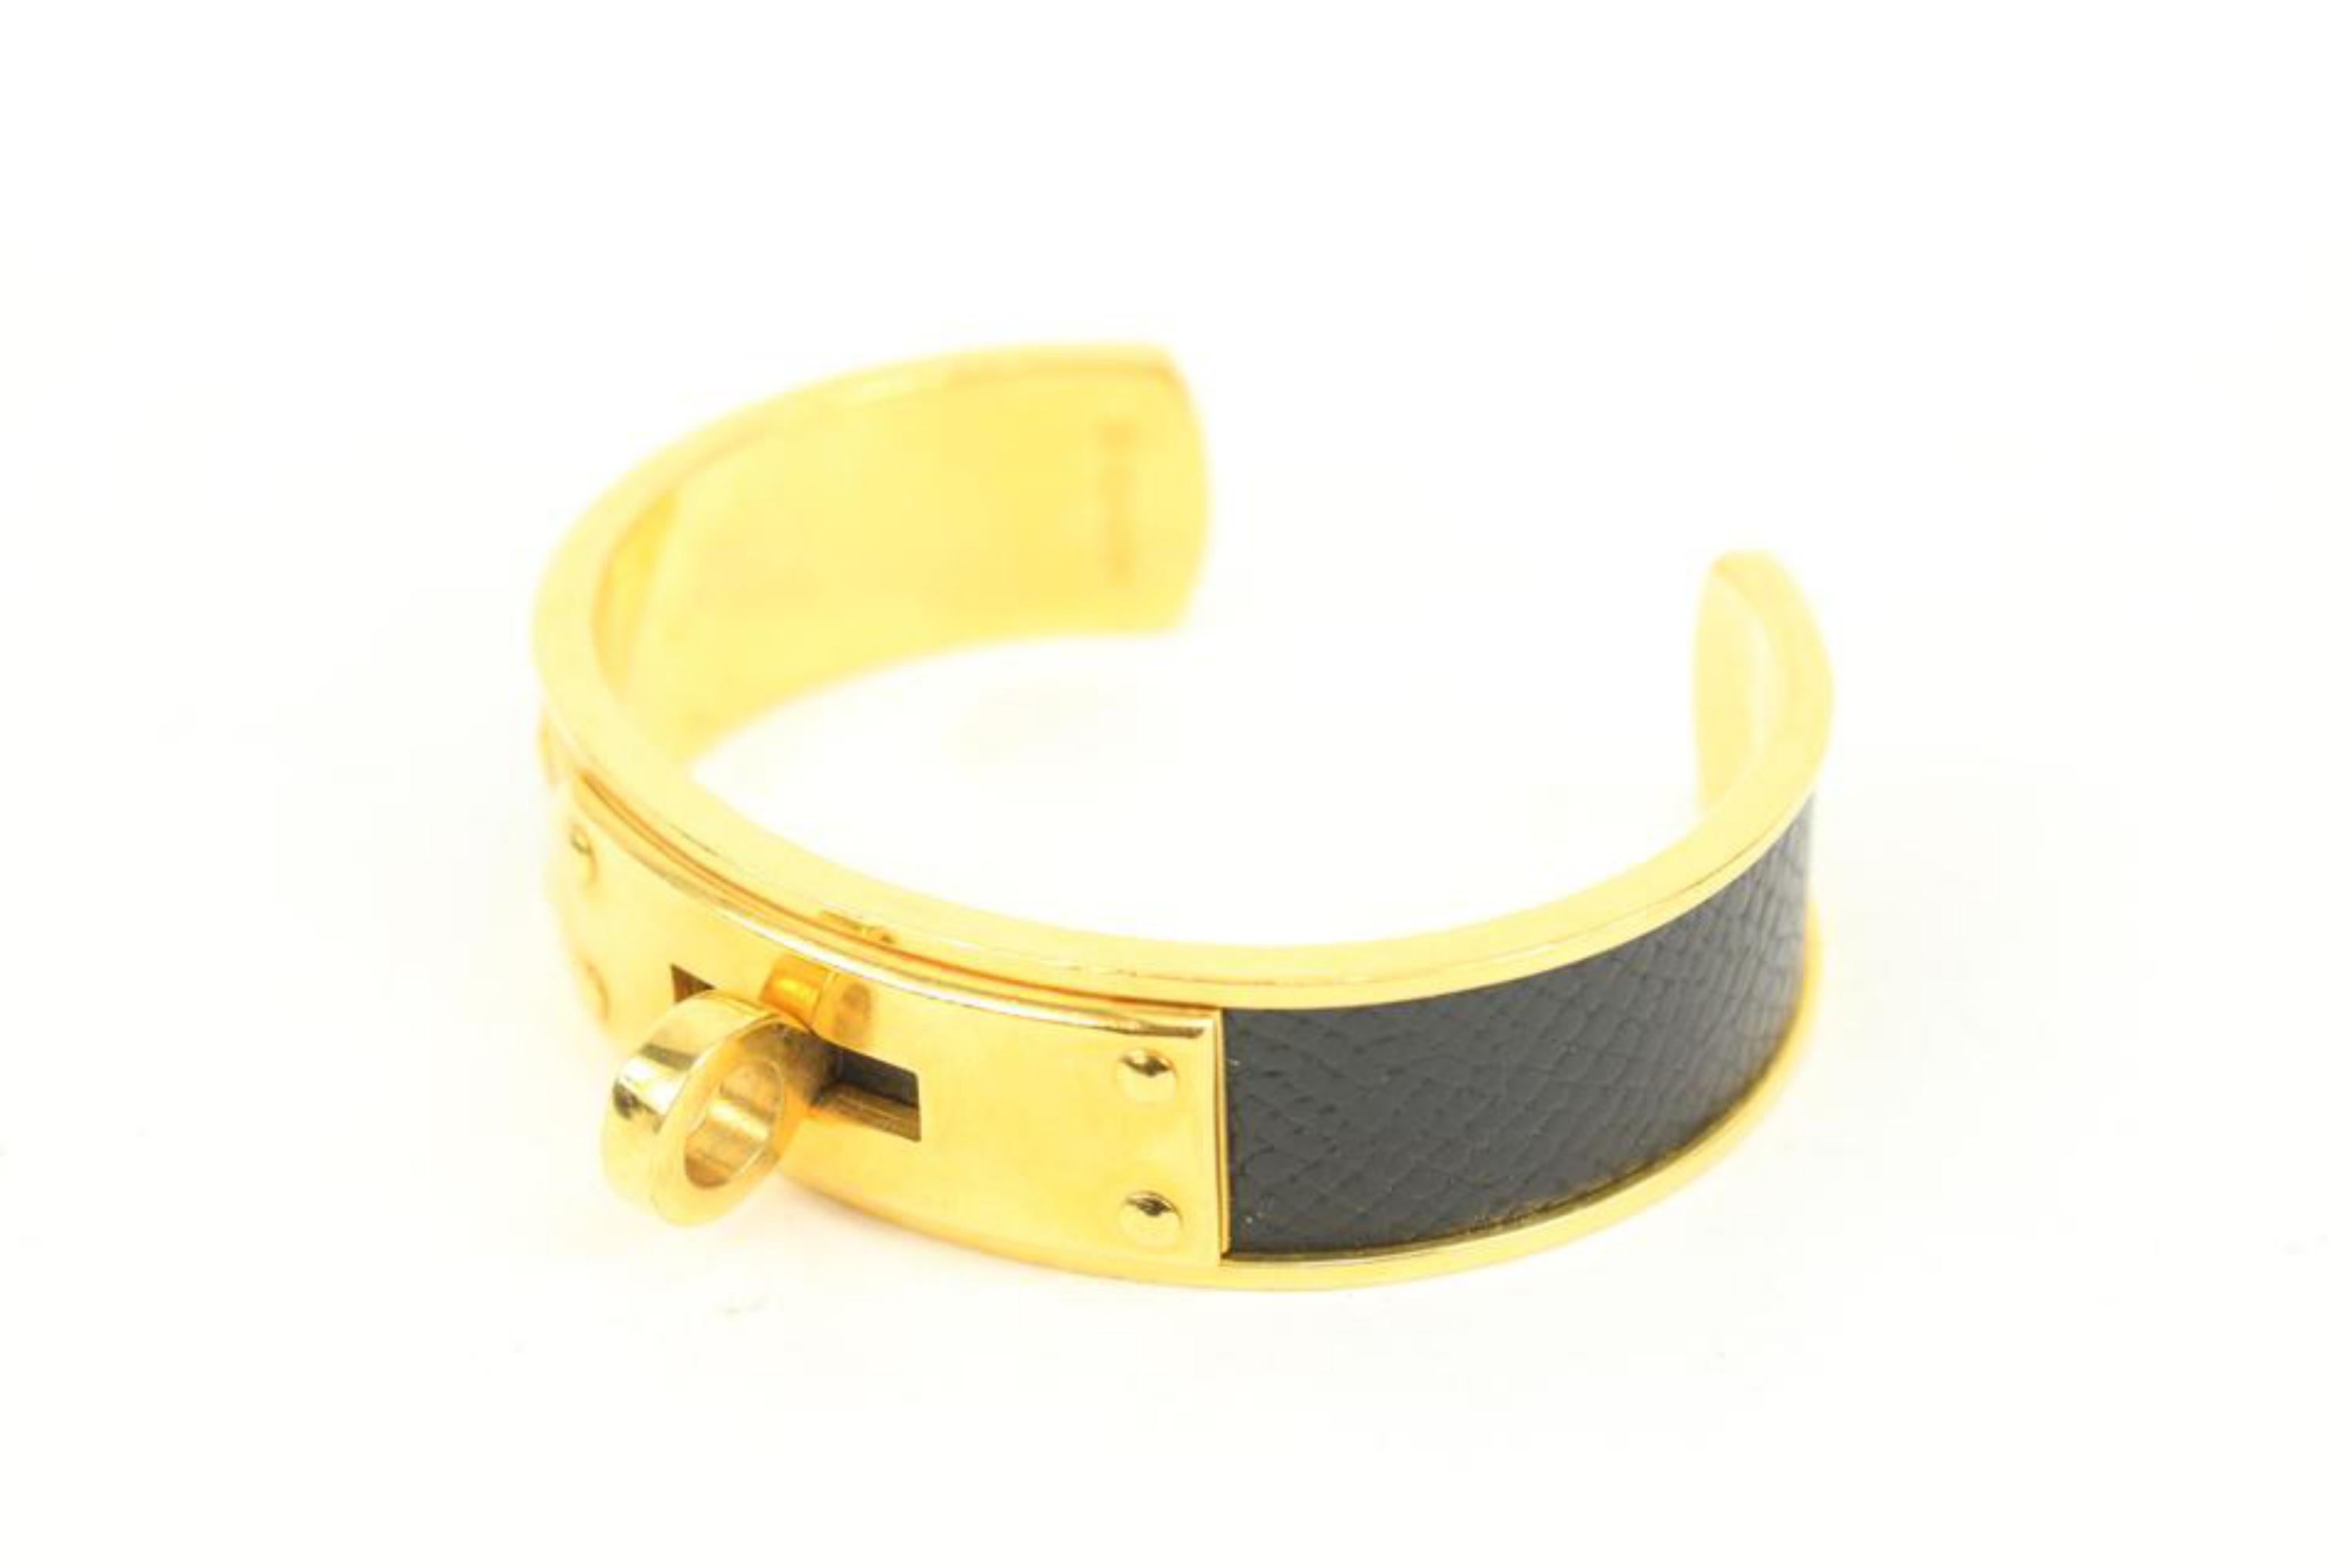 Hermès Black x Gold Kelly Cuff Bangle s331h40
Measurements: Length:  2.3